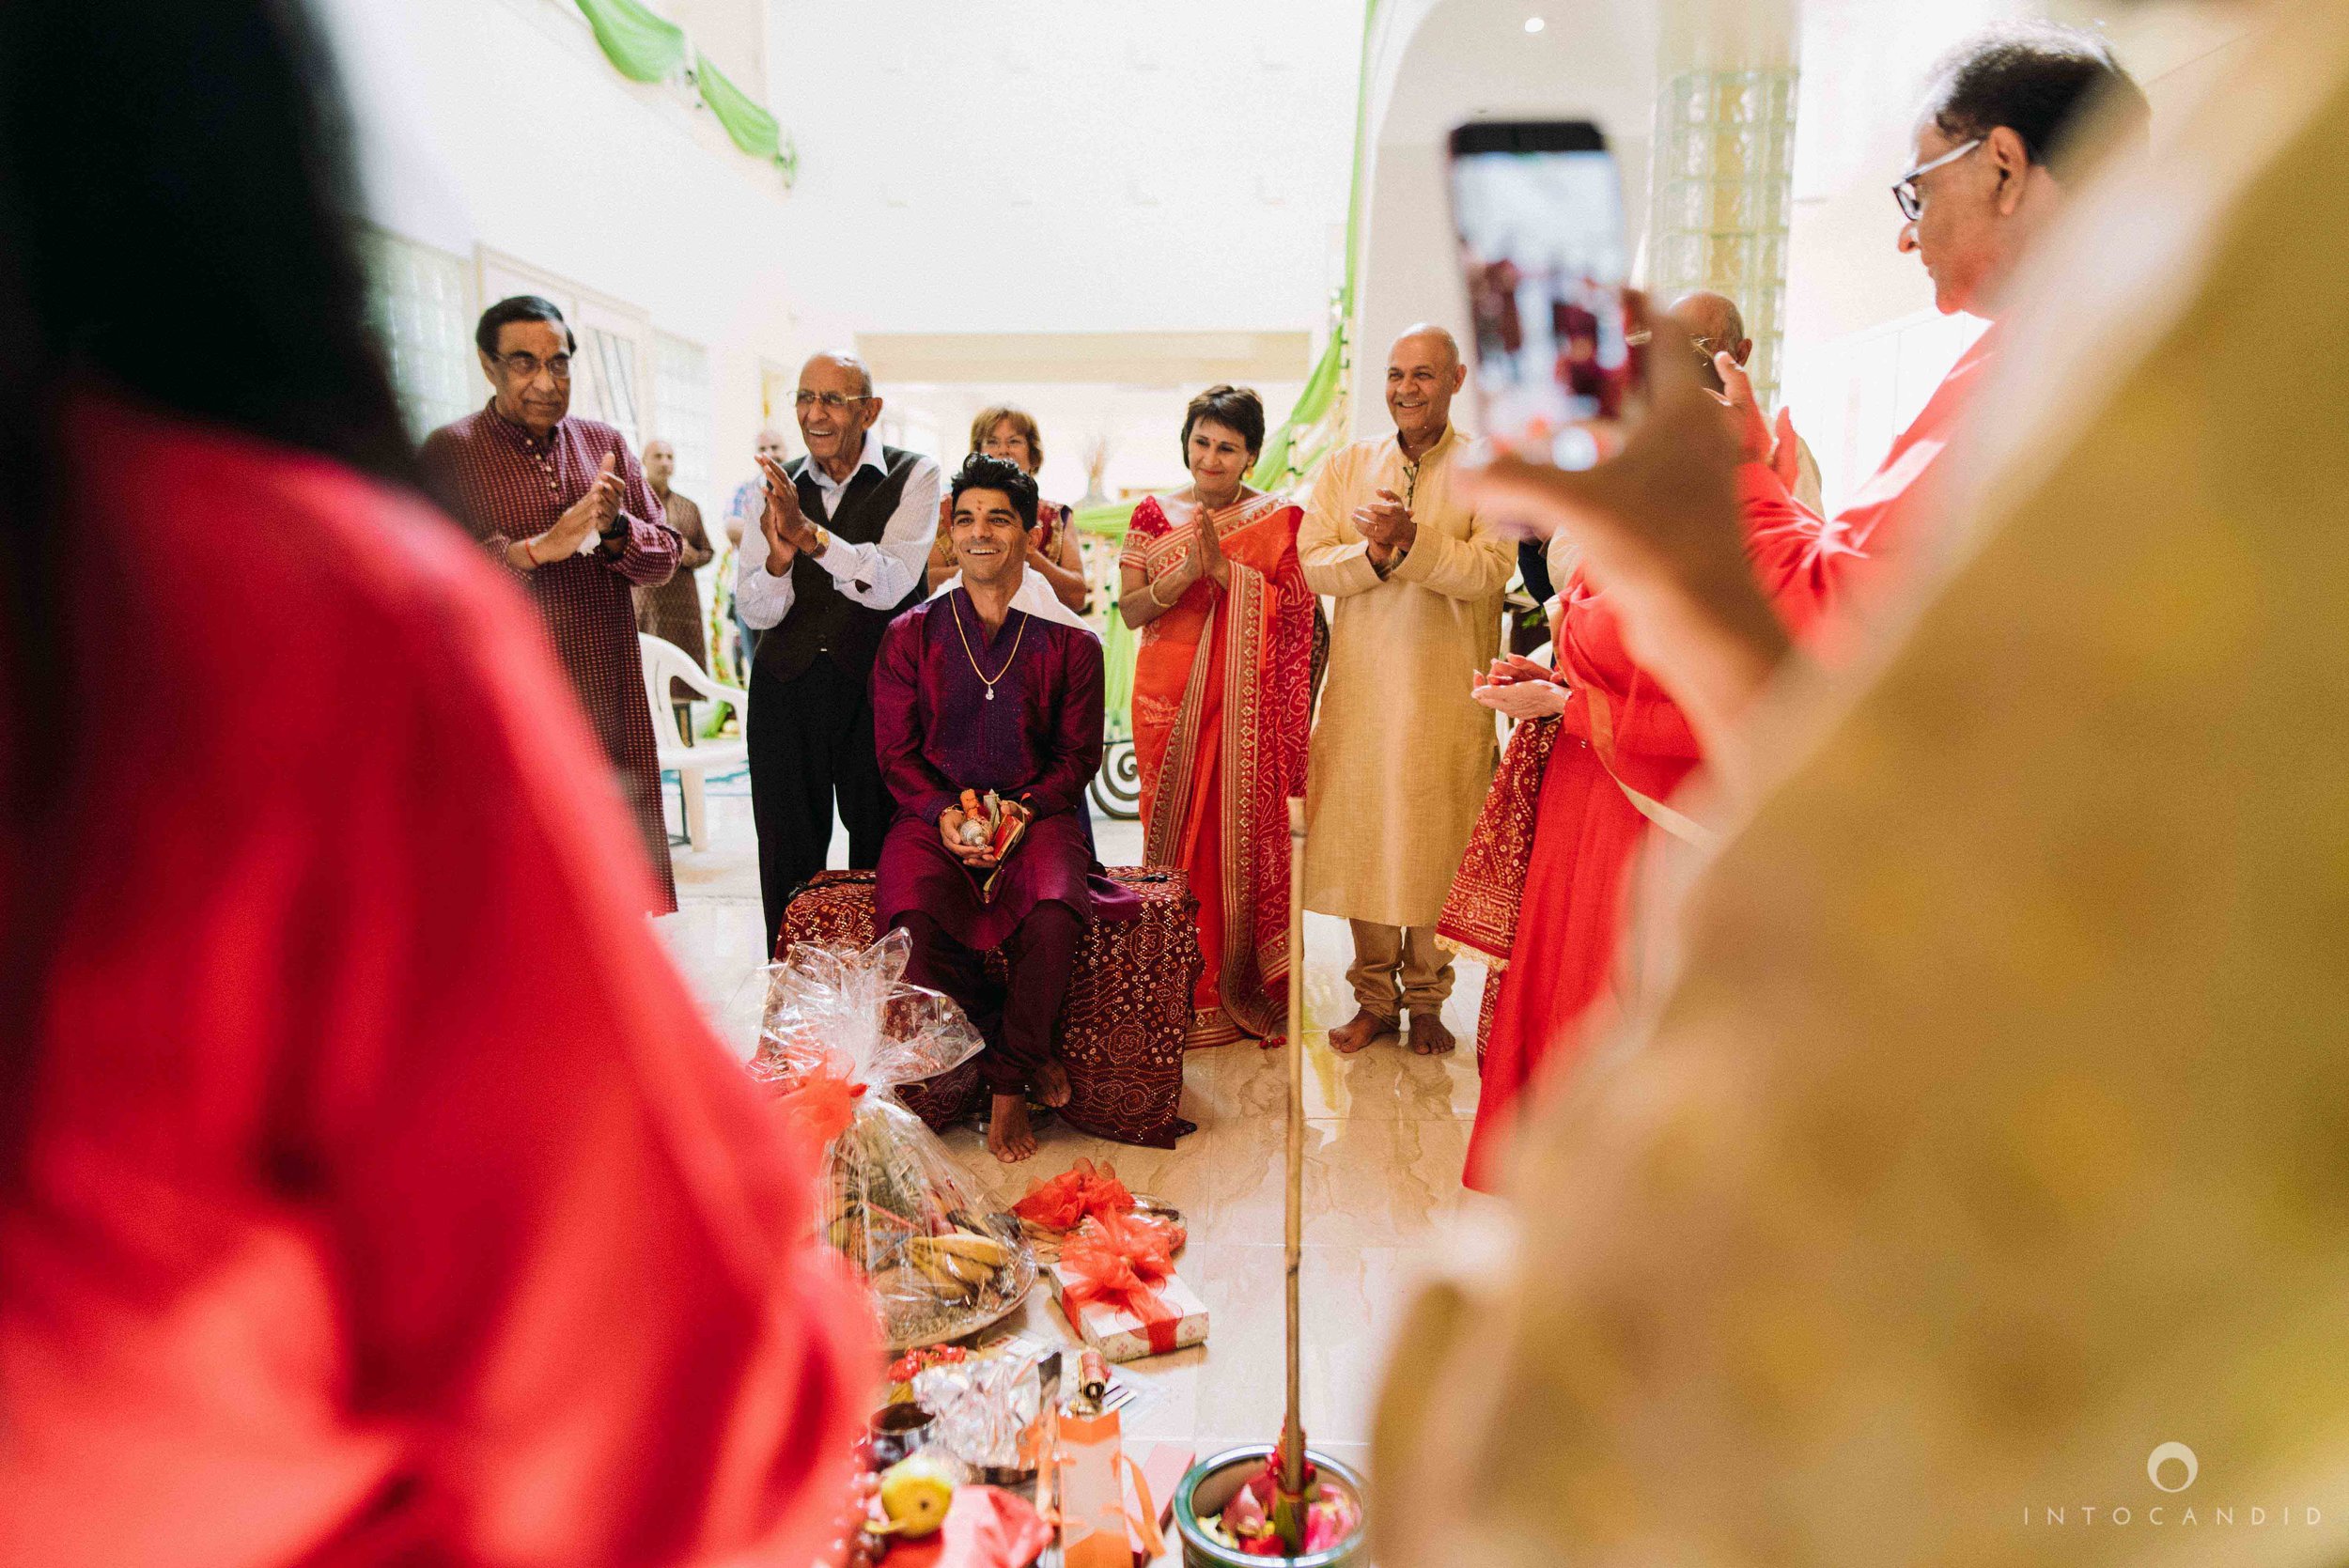 LosAngeles_Indian_Wedding_Photographer_AS_015.jpg